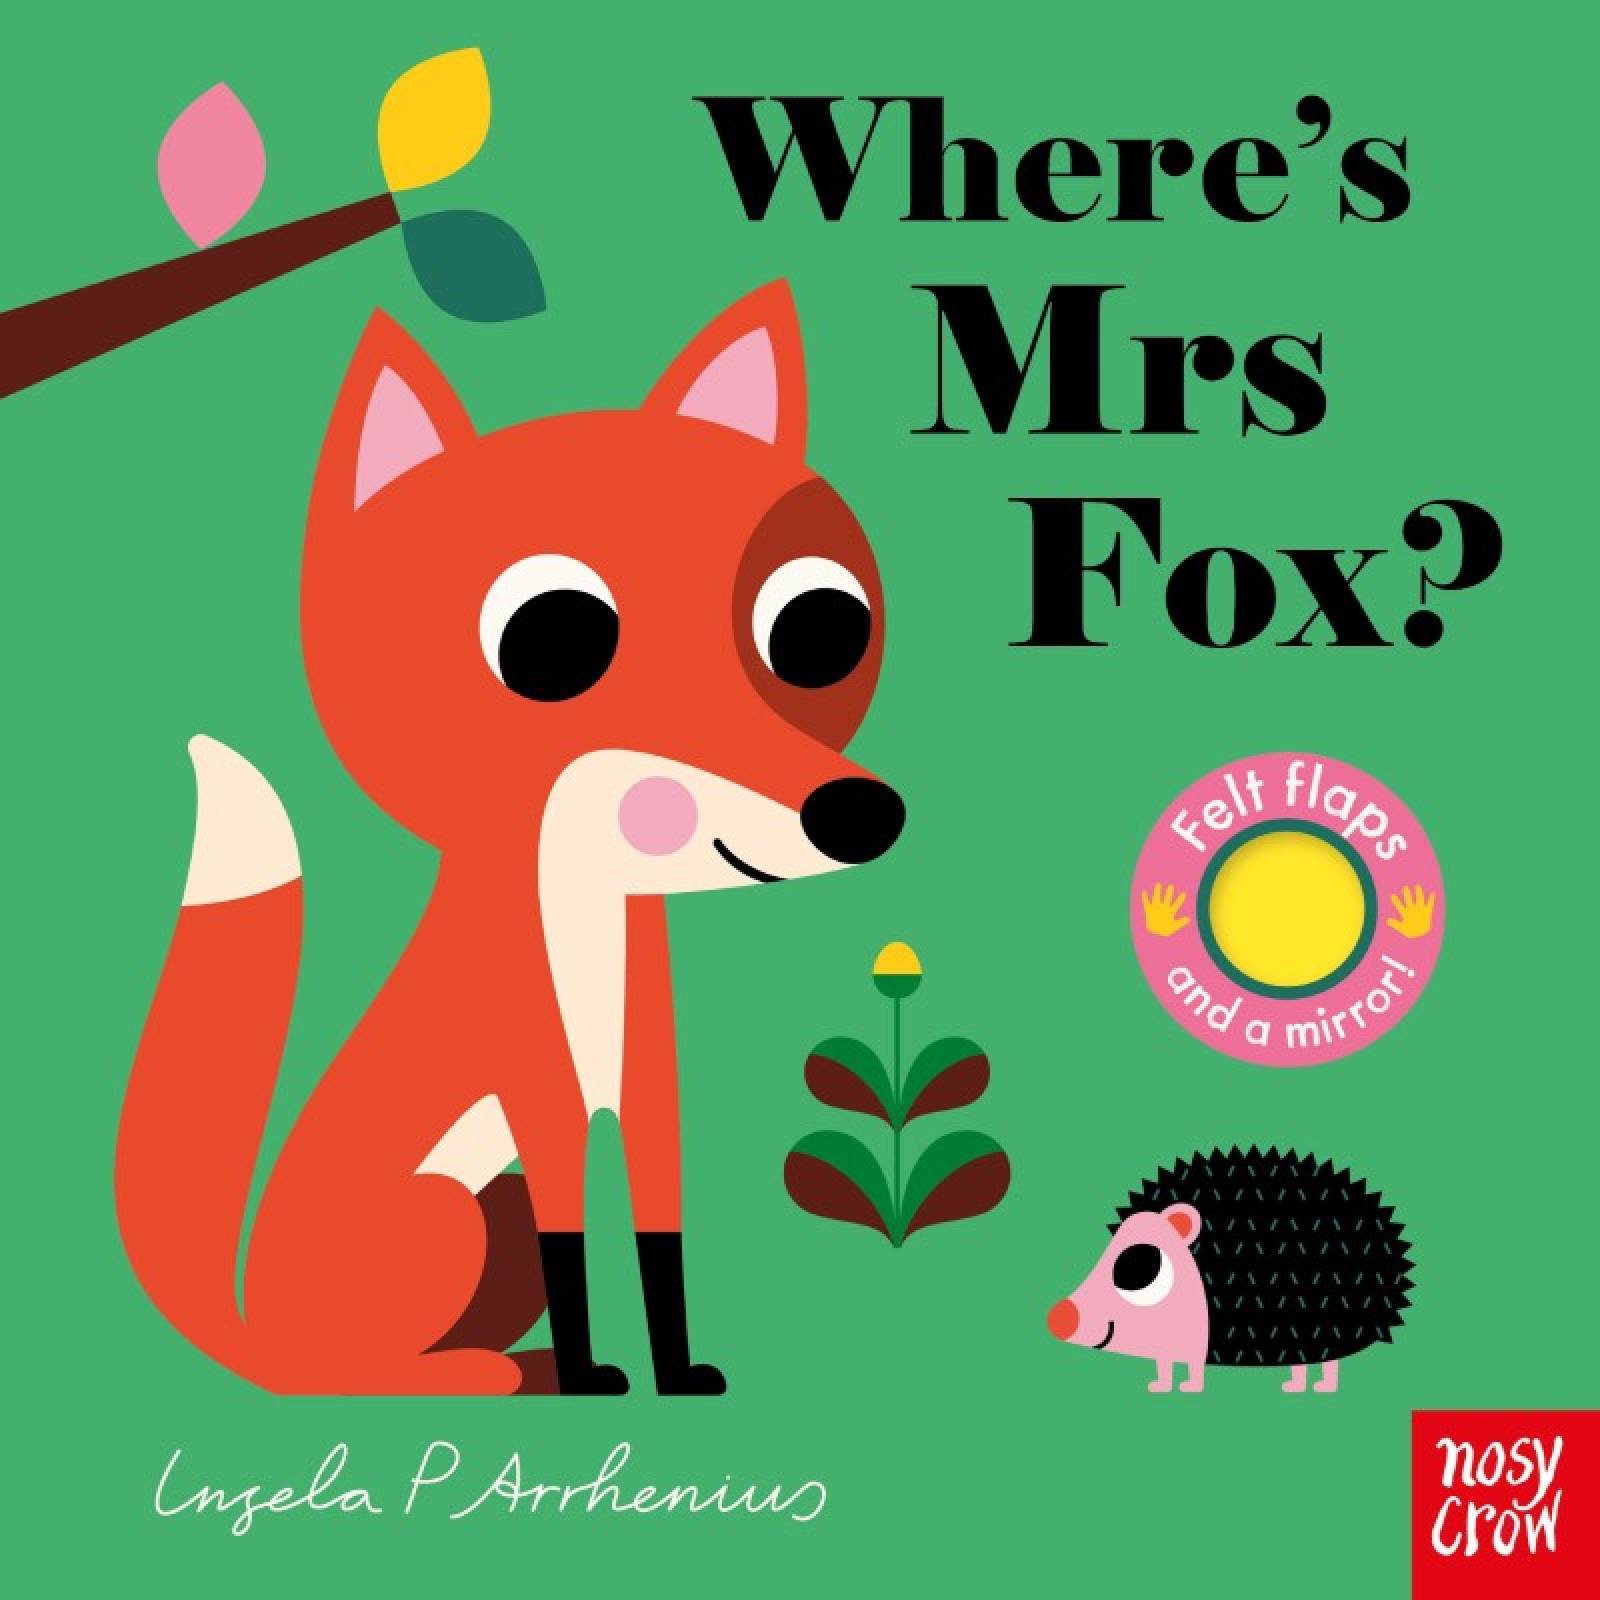 Where's Mrs Fox? (Felt Flaps) - Board Book